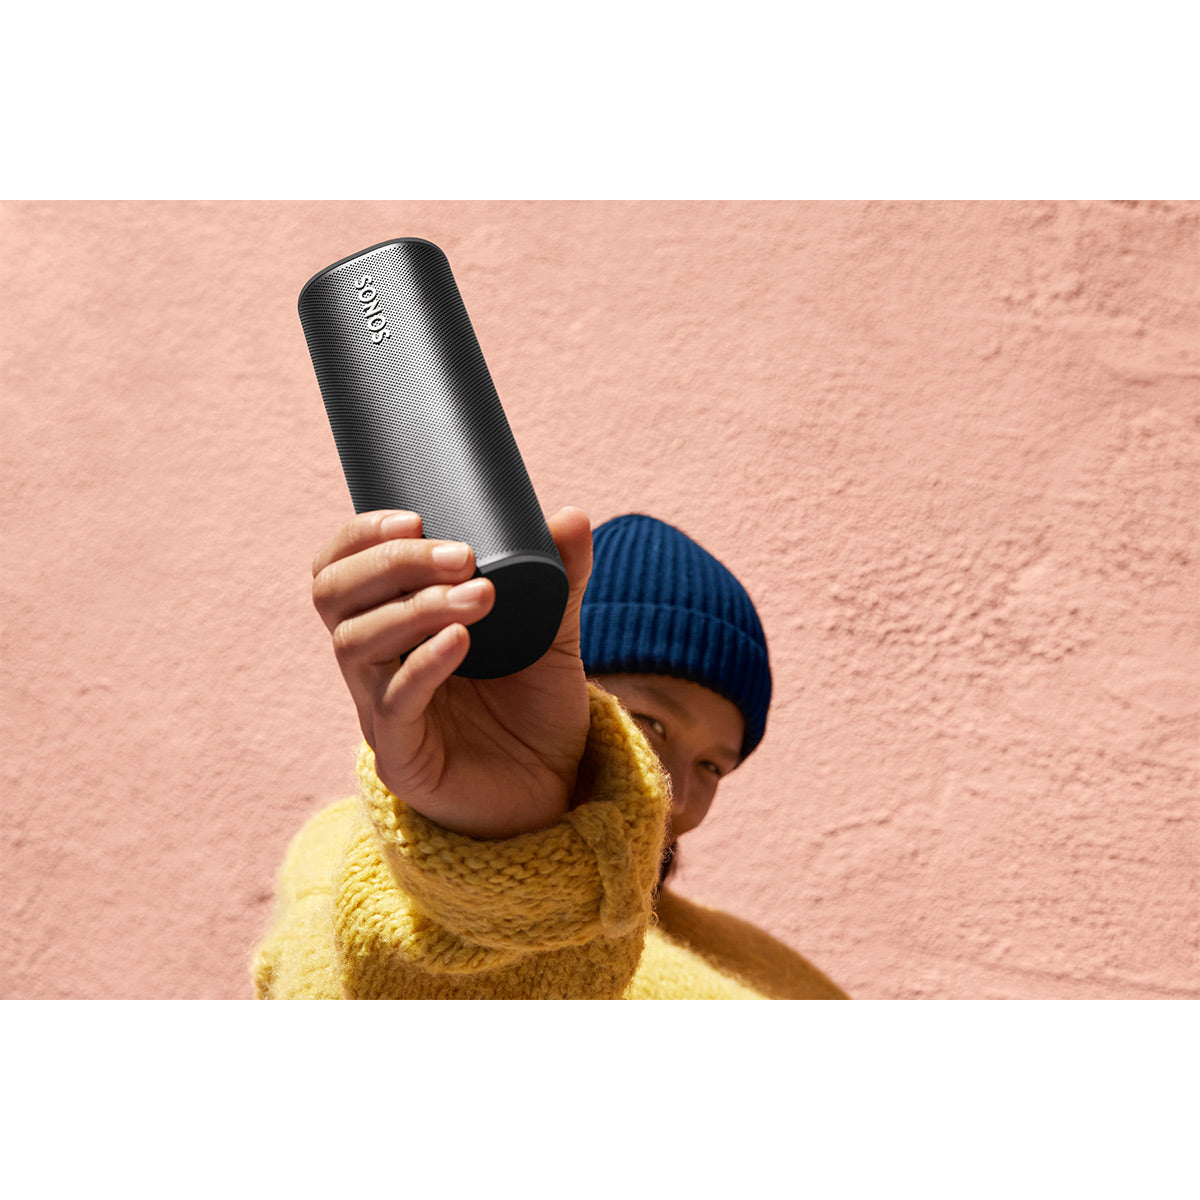 Sonos Roam Portable Waterproof Smart Speaker - Shadow Black for sale online